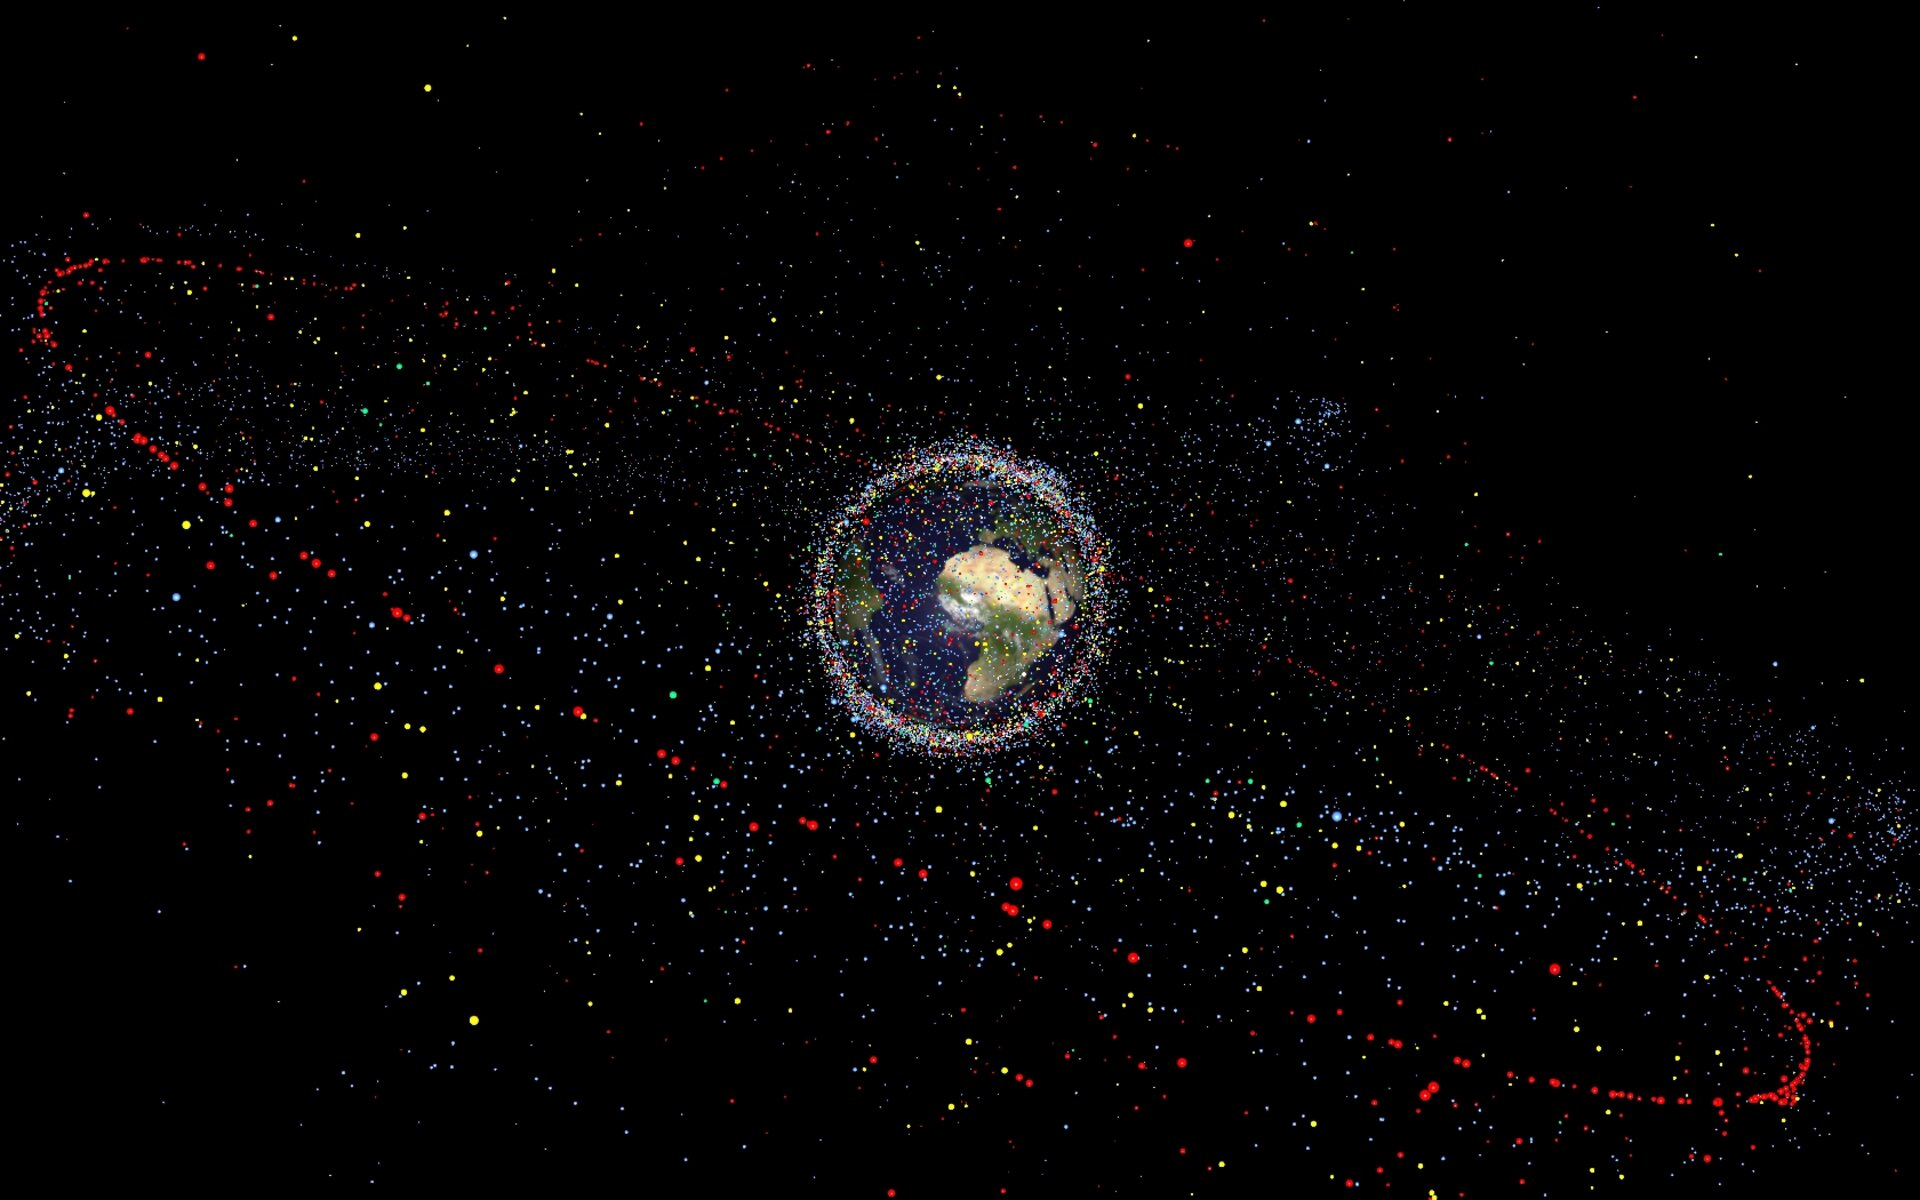 Distribution of debris around the Earth